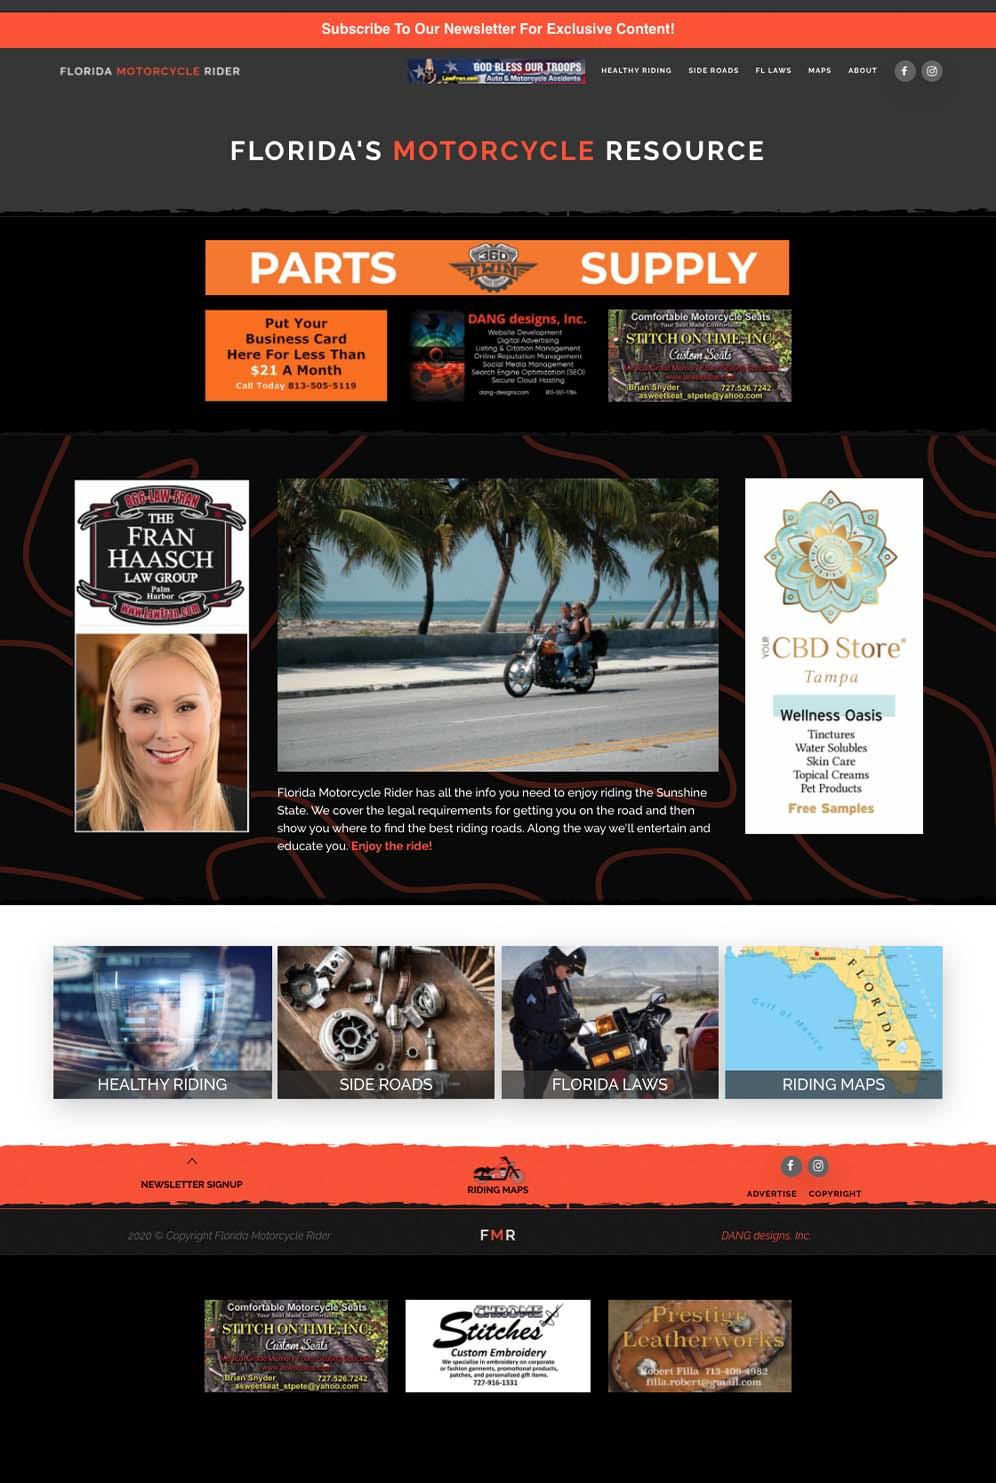 FloridaMotorcycleRider.com